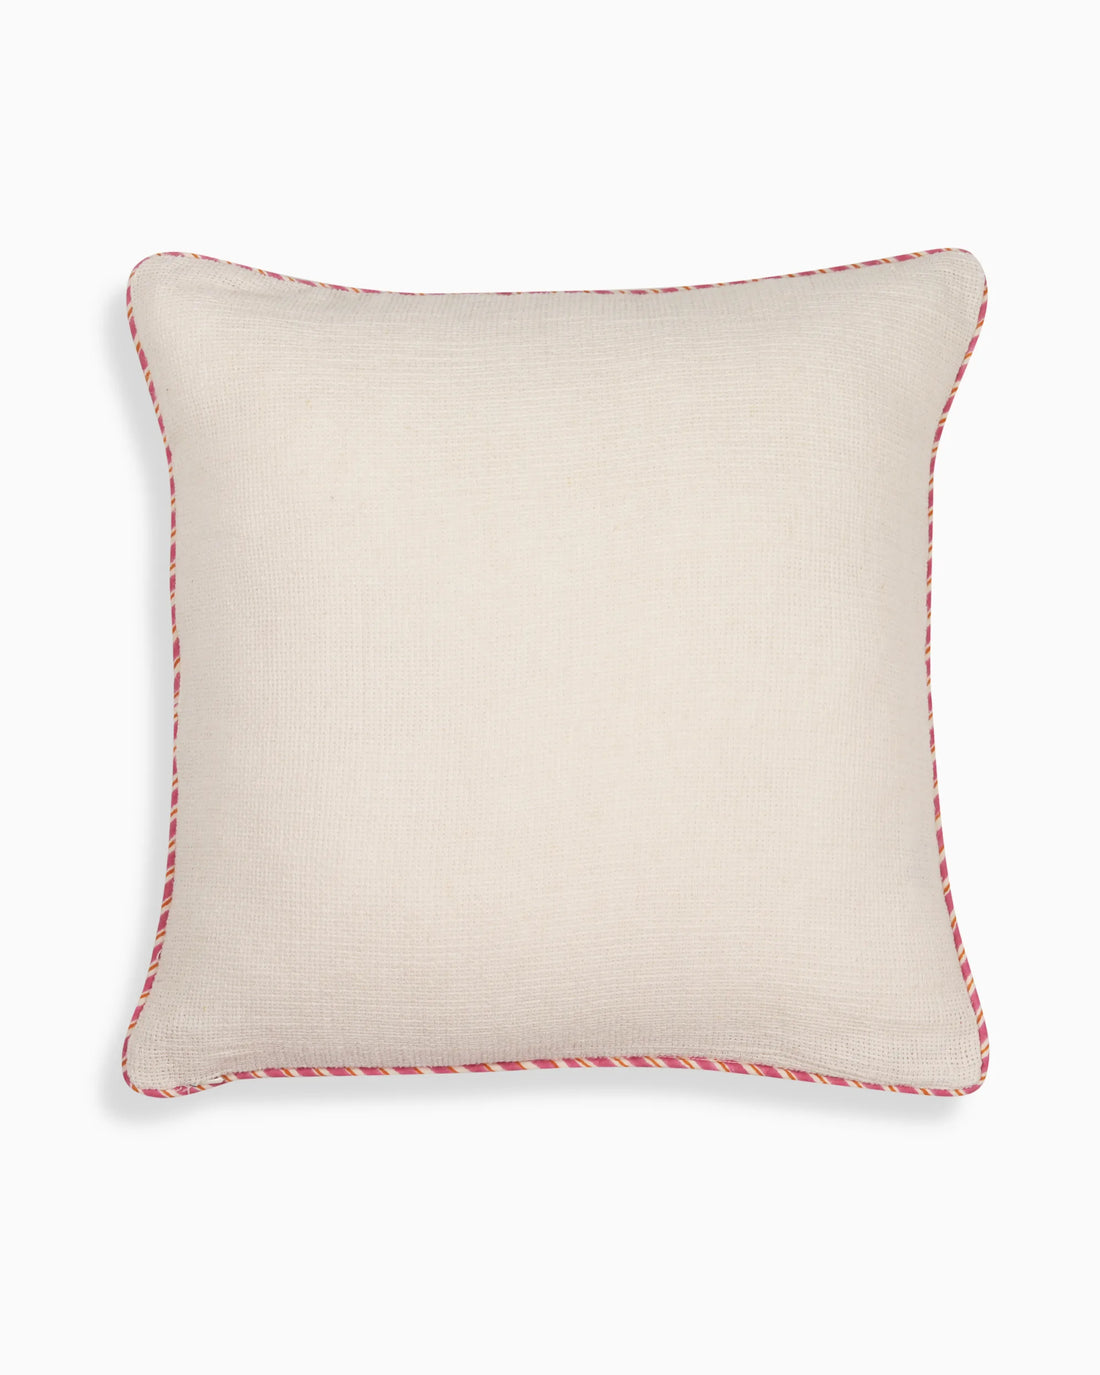 Rose Petal Pillow Cover